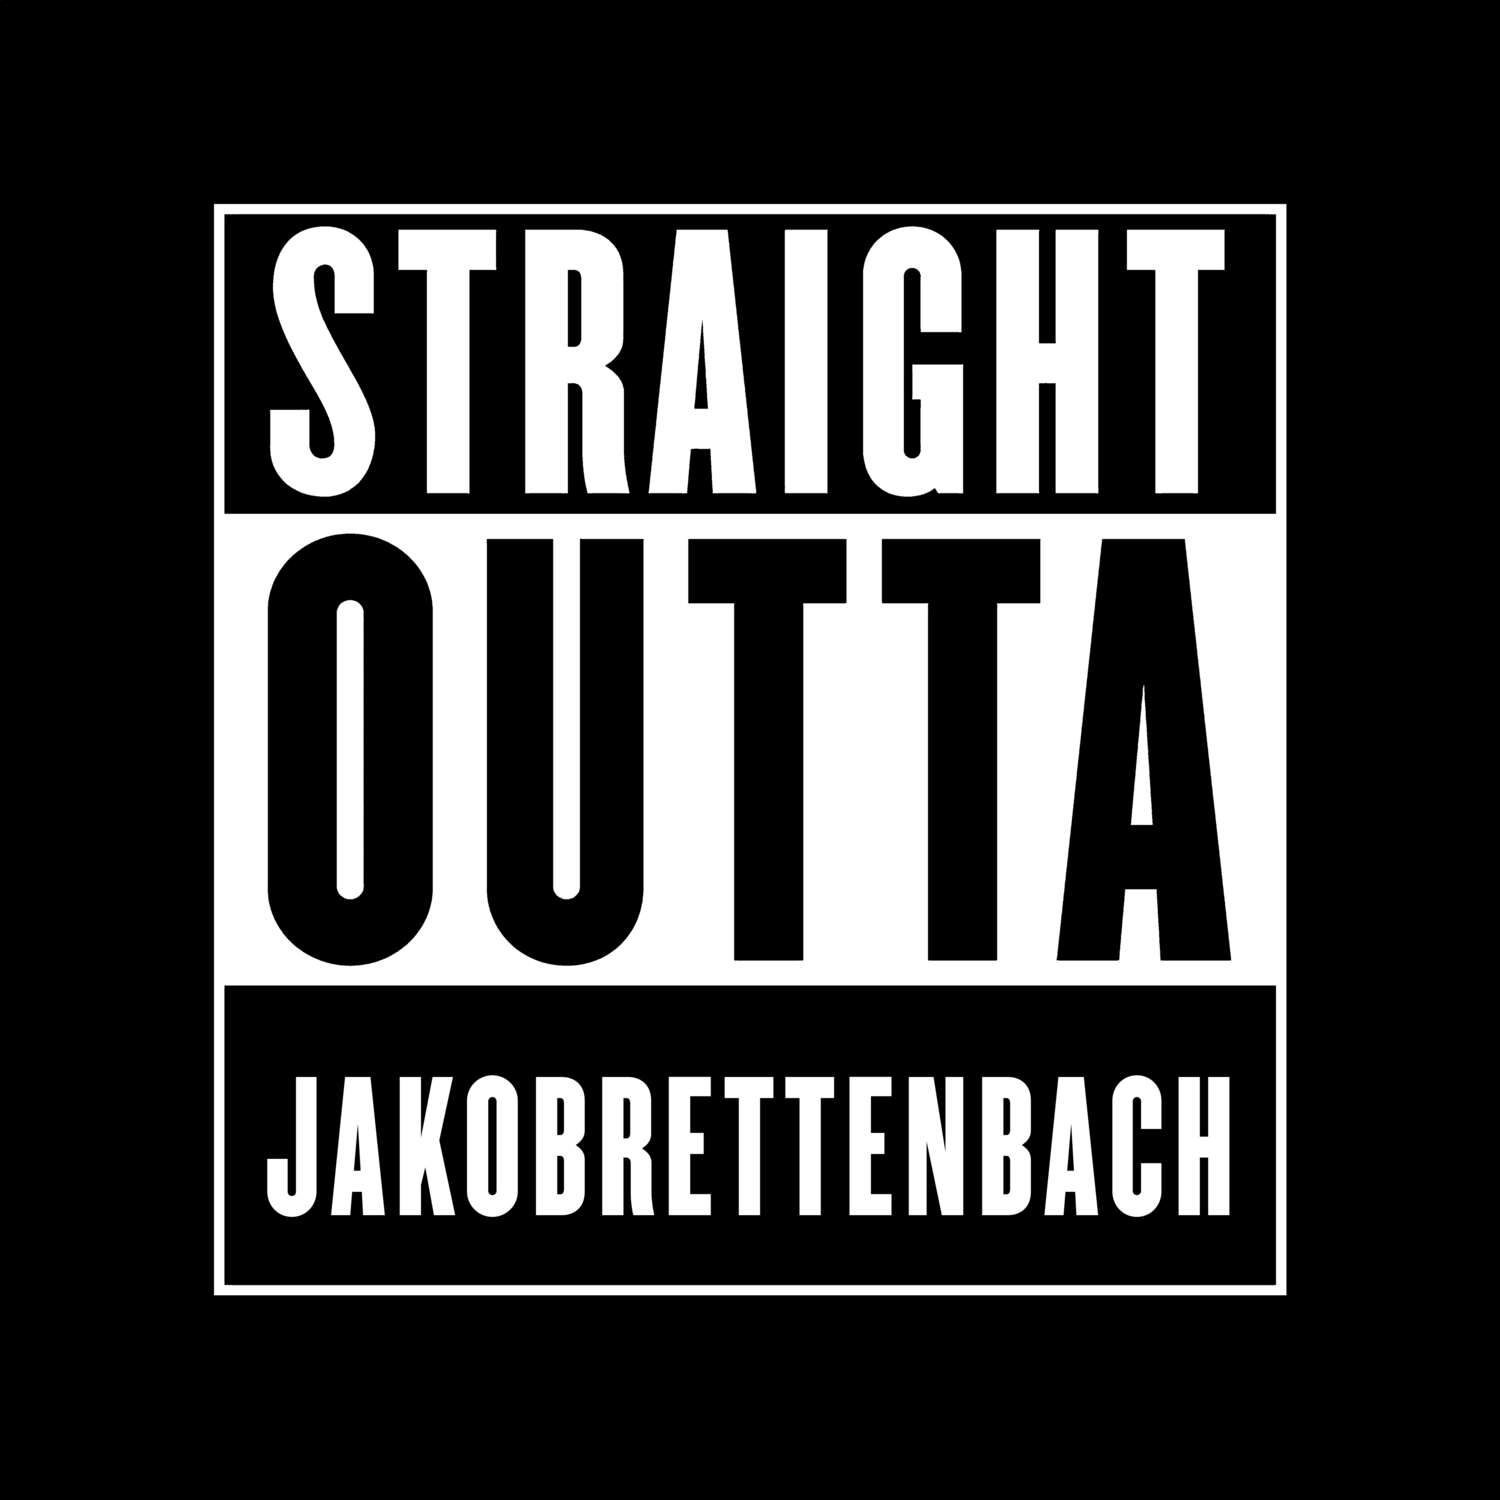 Jakobrettenbach T-Shirt »Straight Outta«